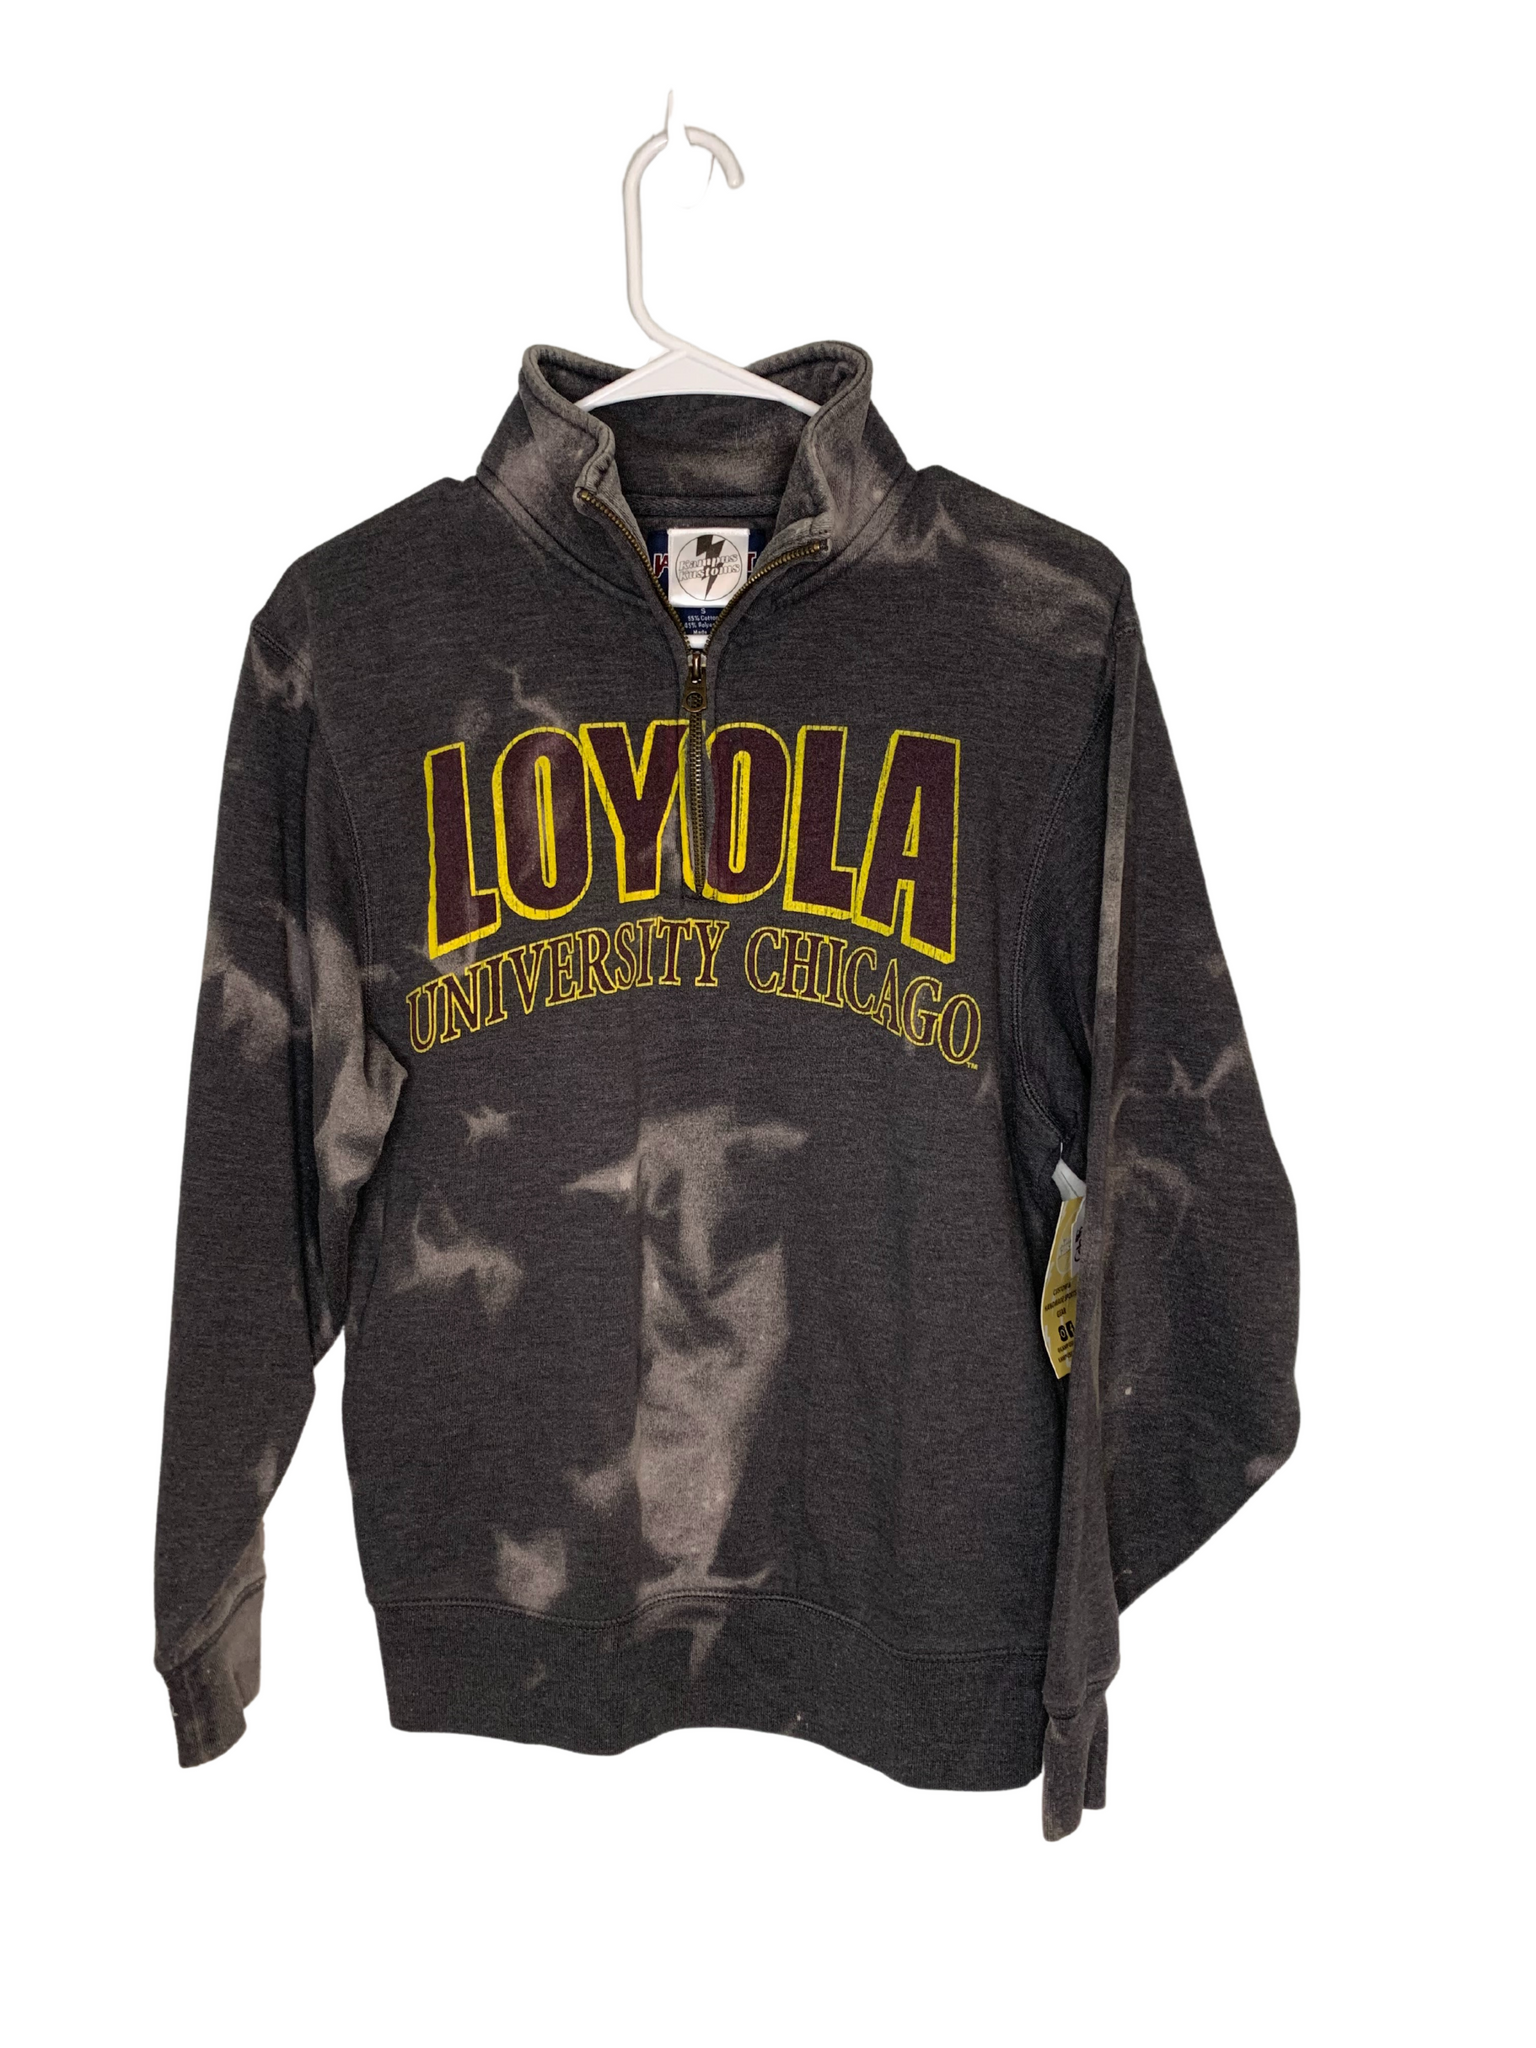 Loyola University Chicago Bleached Quarter-Zip Sweatshirt